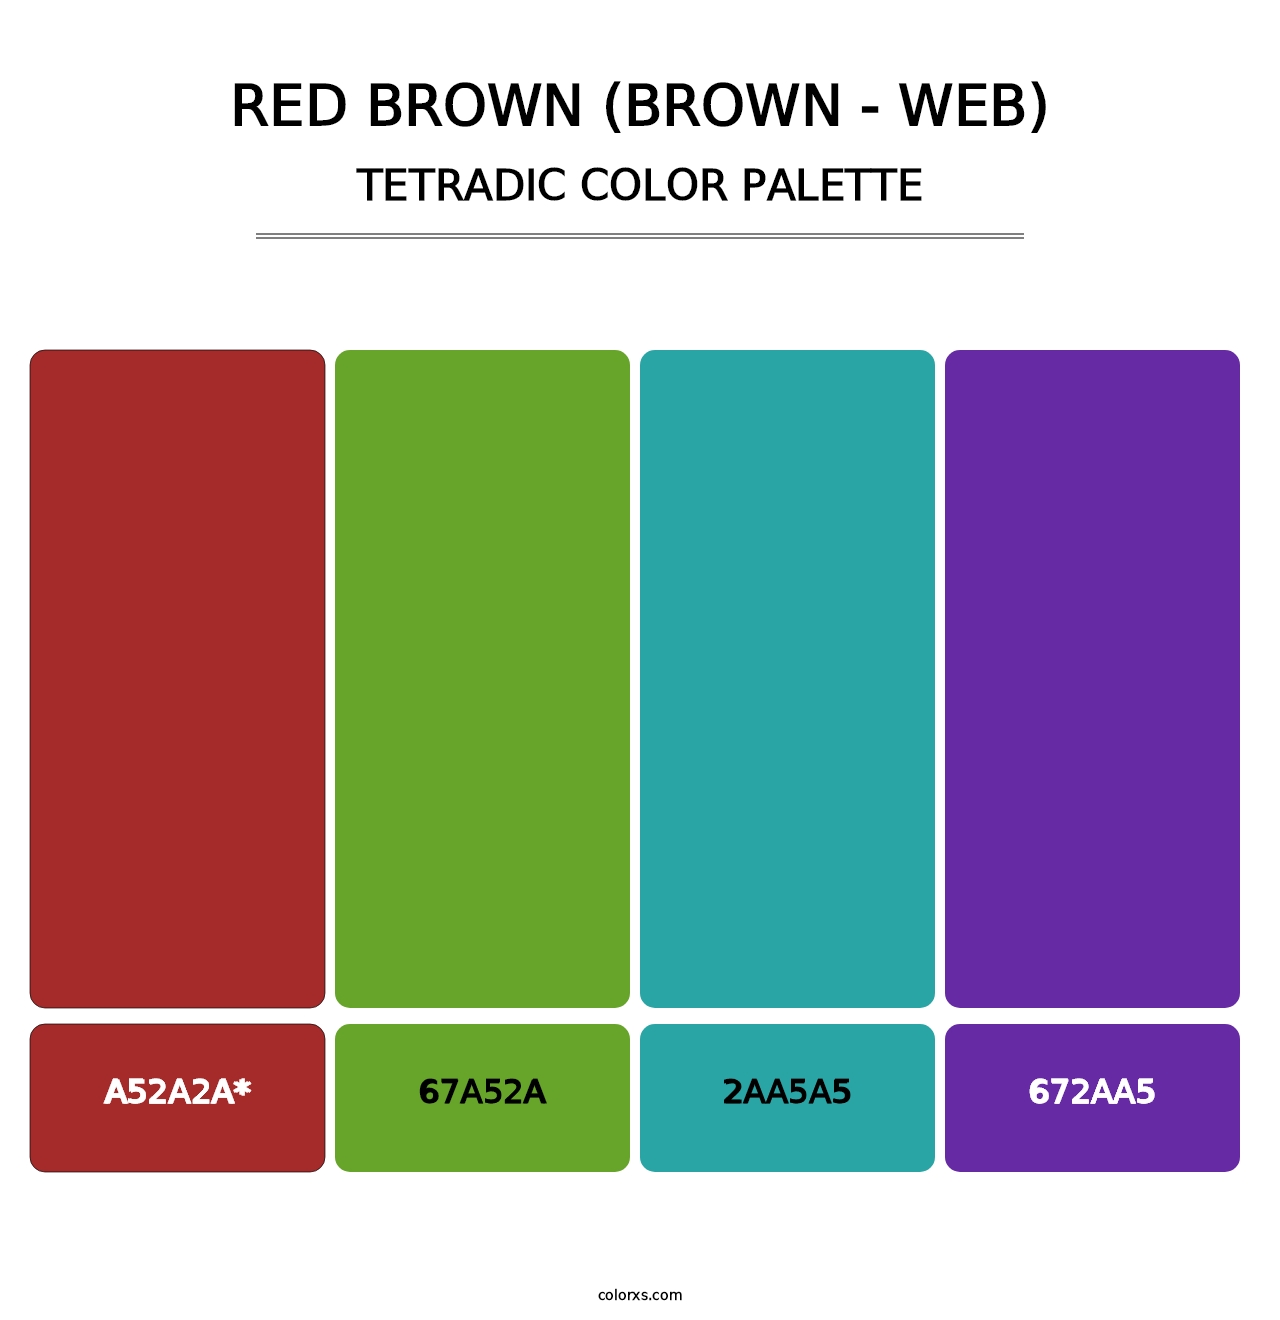 Red Brown (Brown - Web) - Tetradic Color Palette